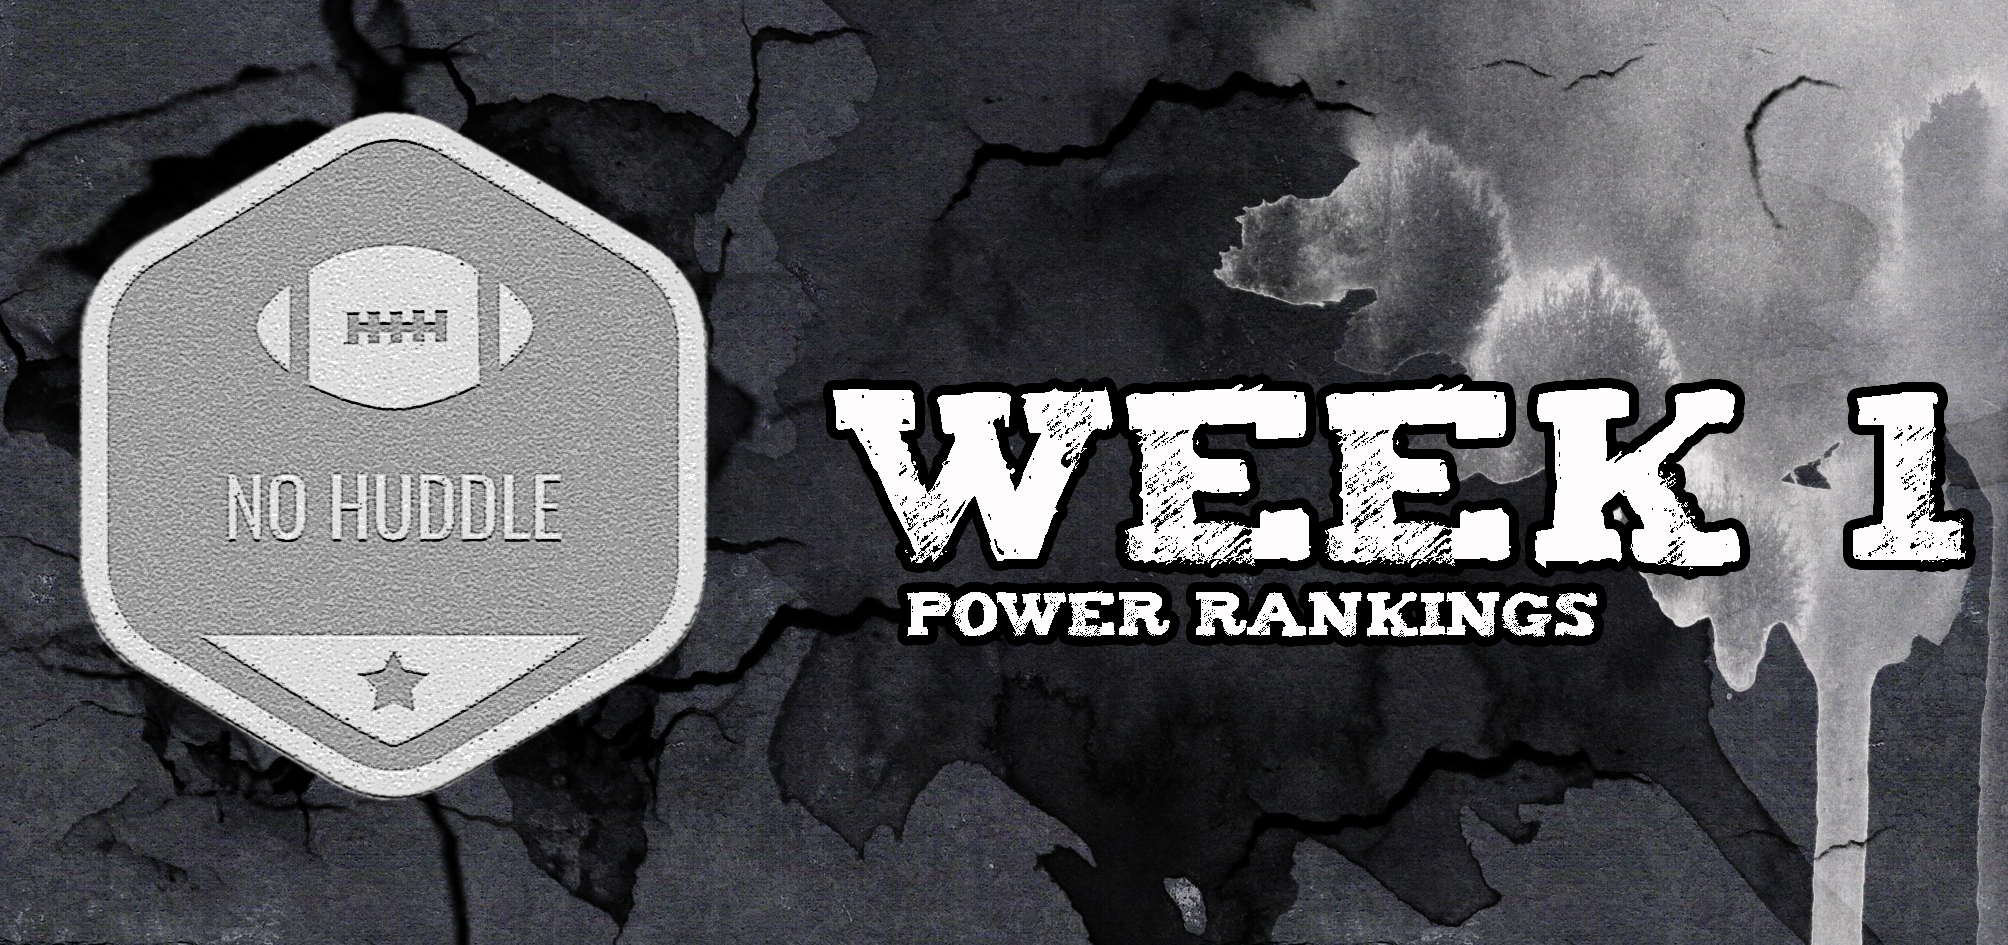 Power Rankings: Semana 1